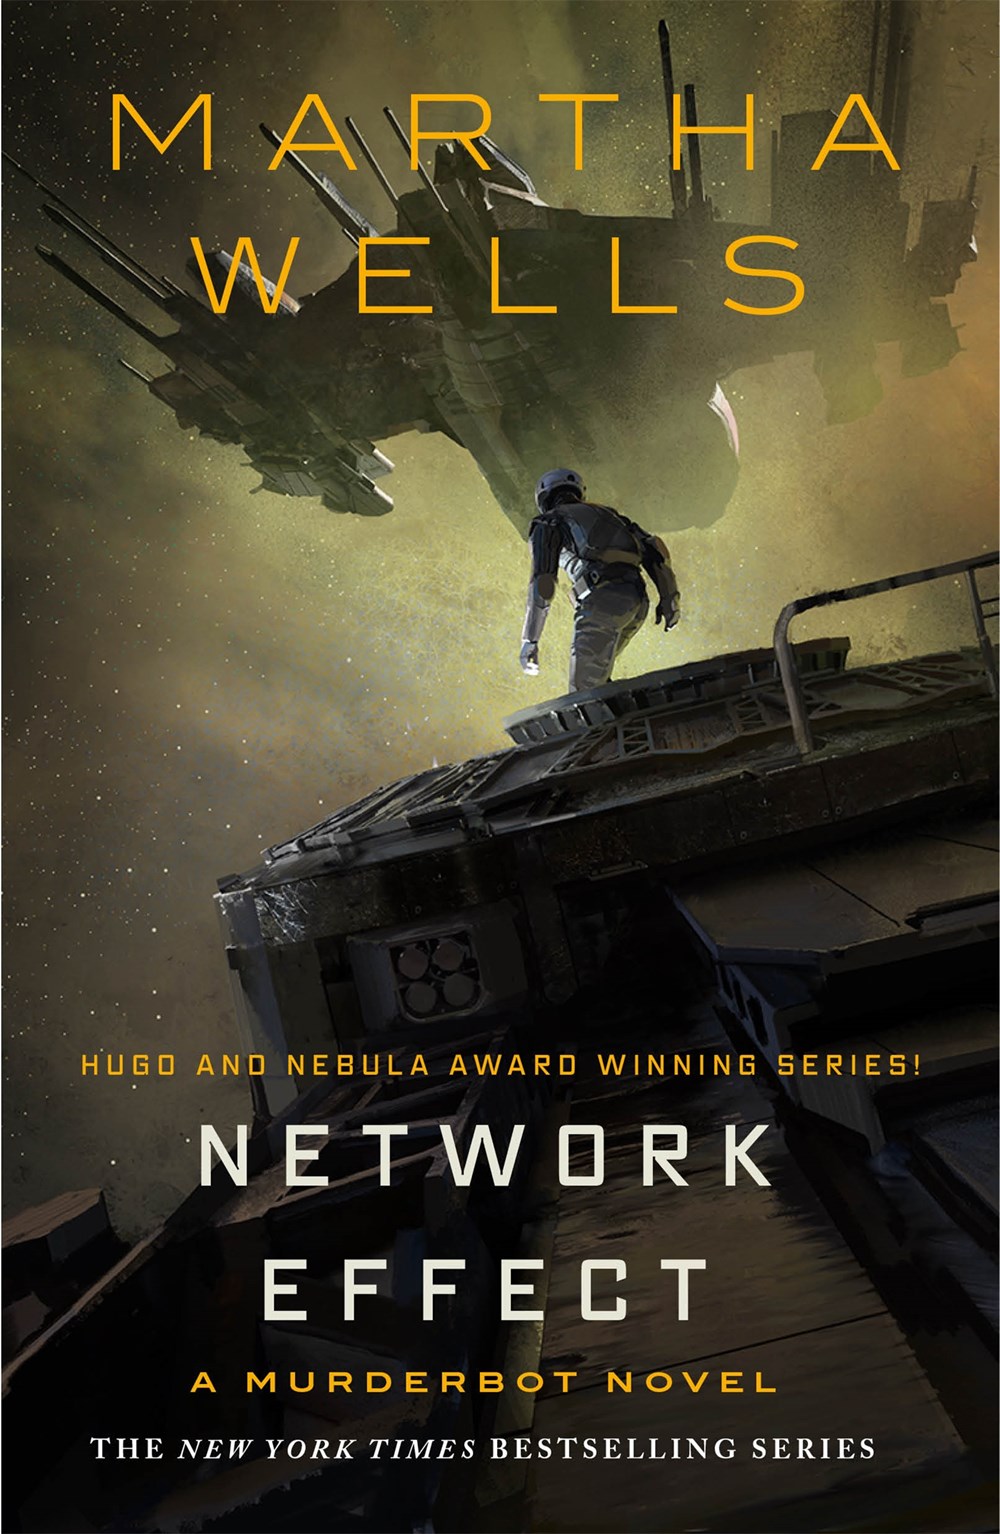 Martha Wells Wins Hugo Awards for Best Novel and Best Series | Book Pulse